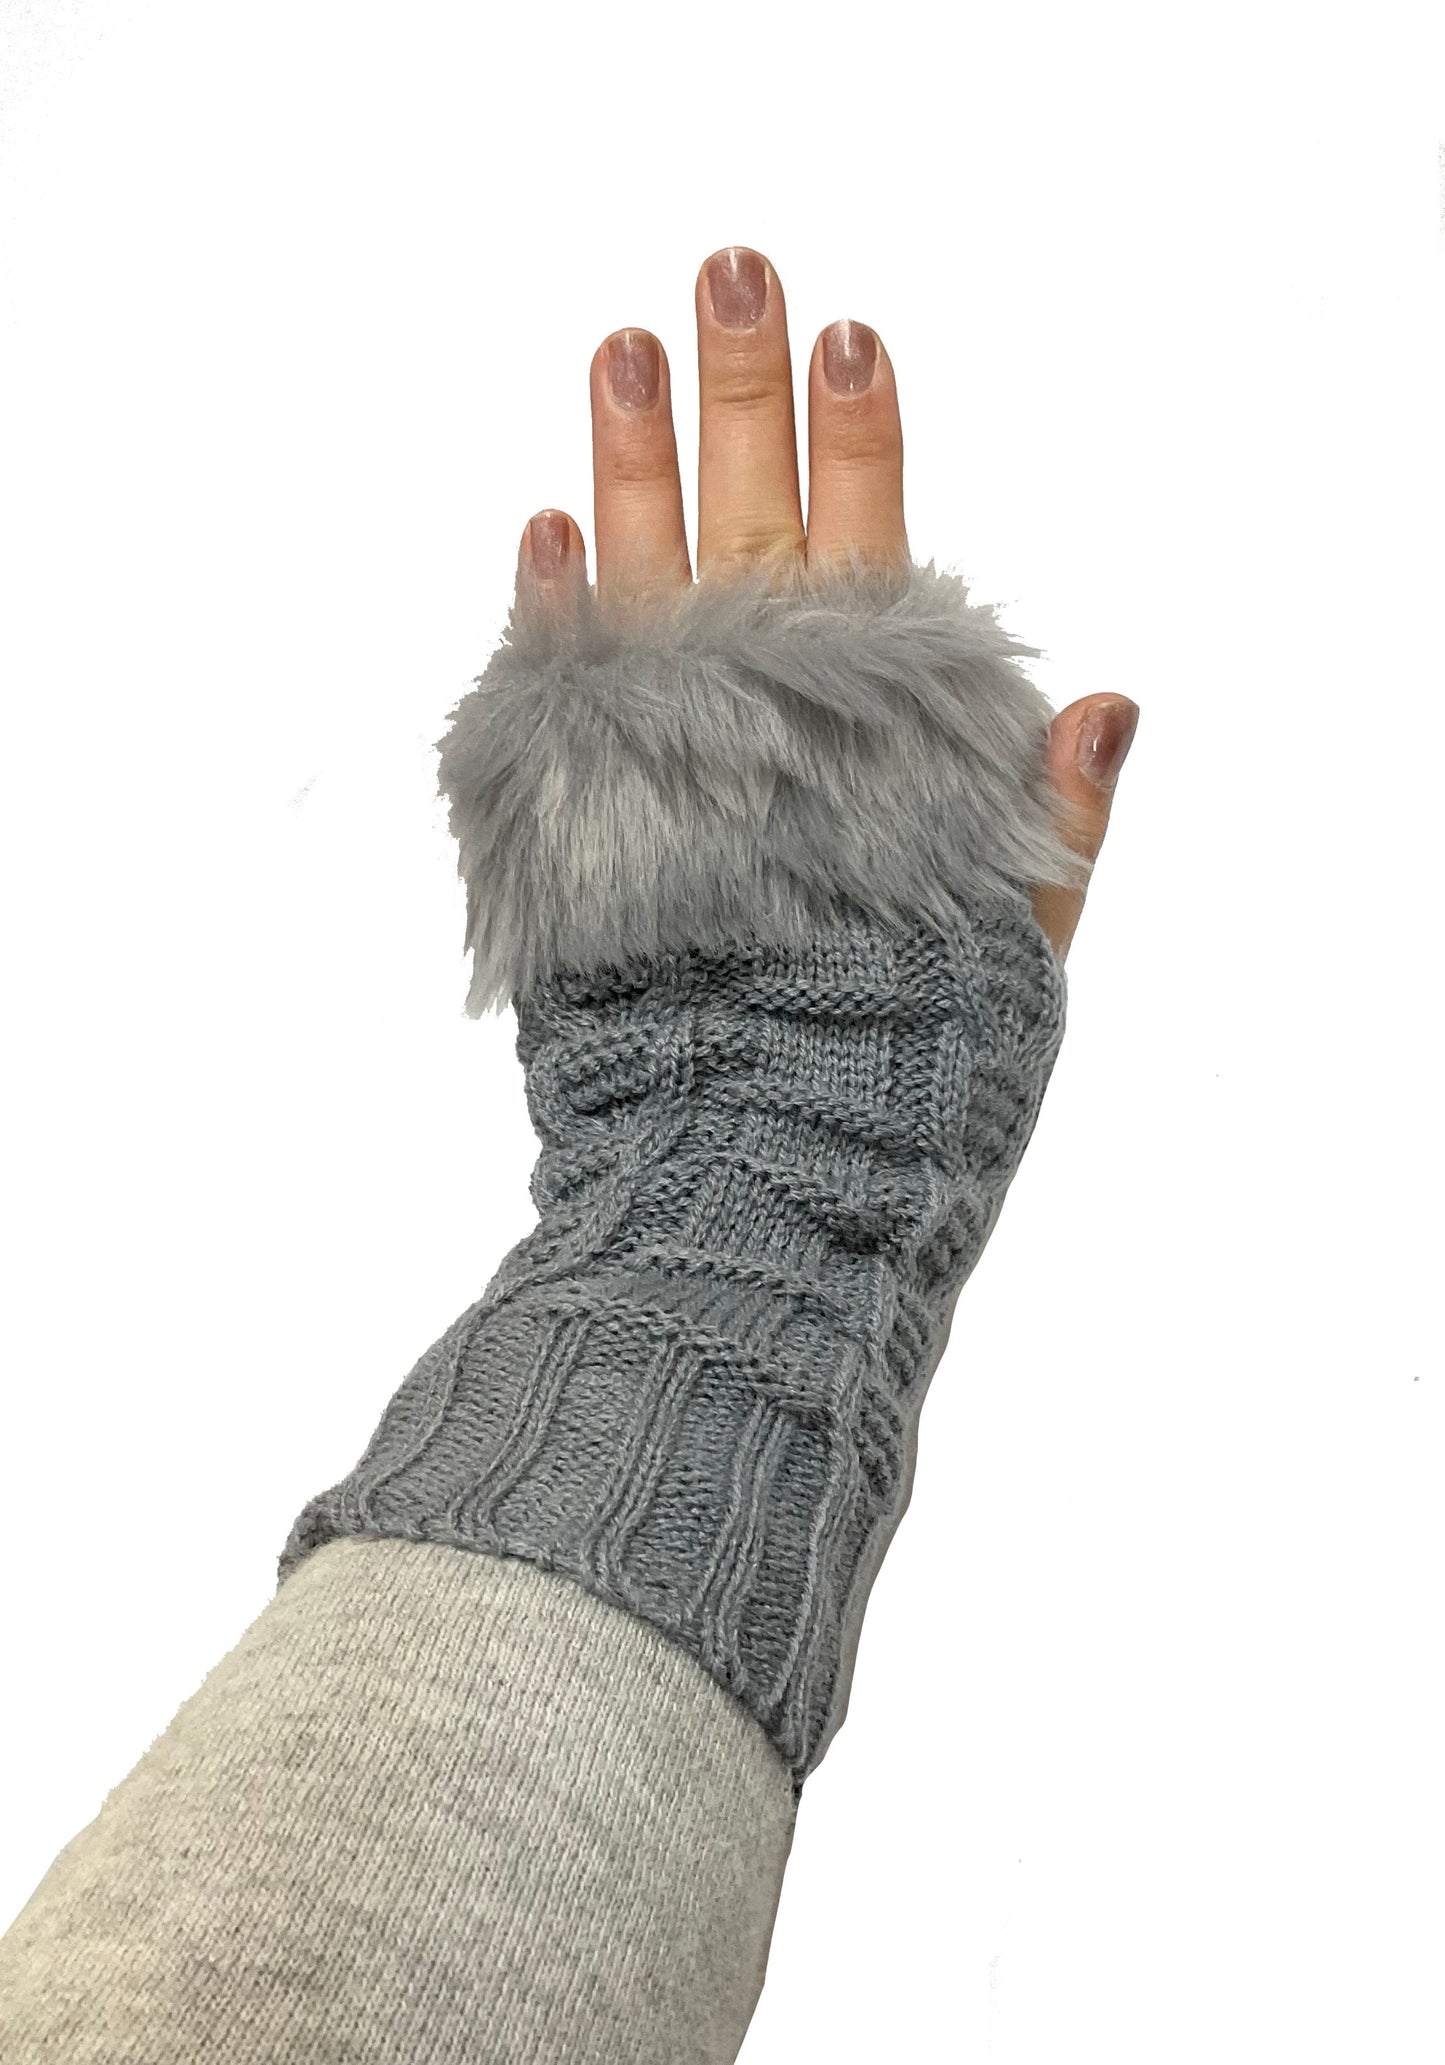 Fur Knitted Fingerless Glove #89-93144